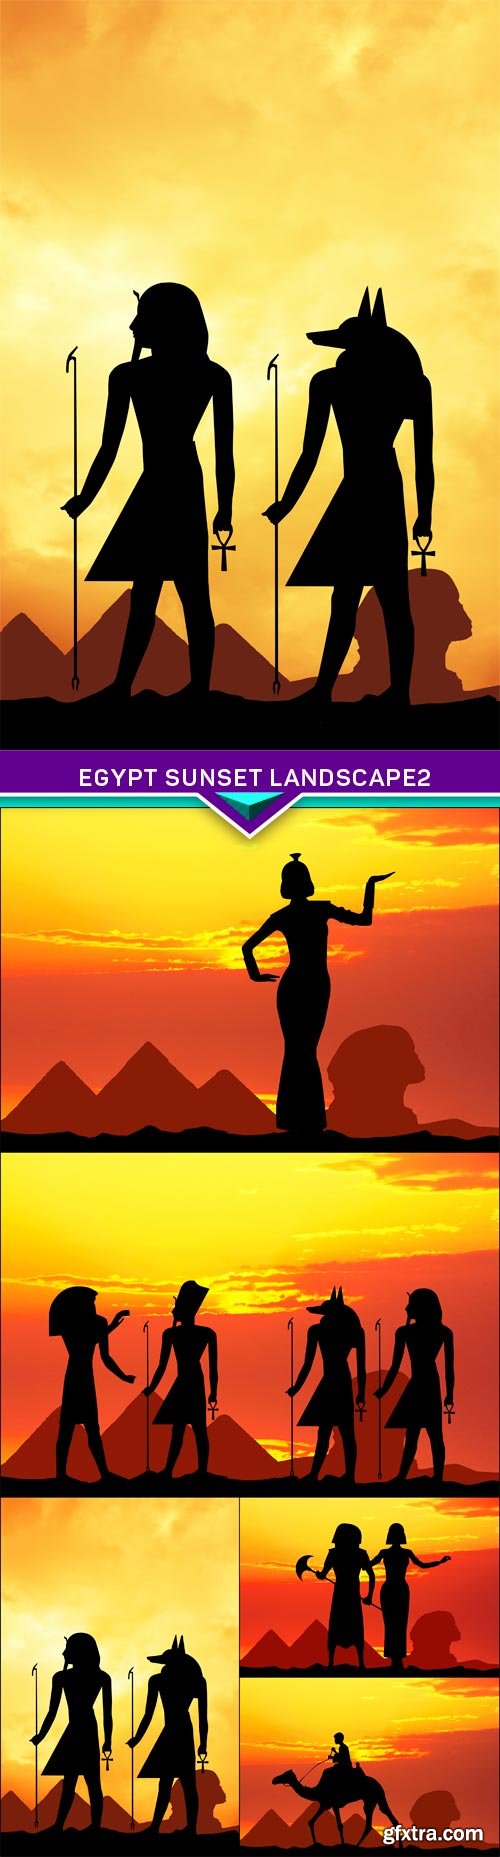 Egypt sunset landscape 2 5x JPEG